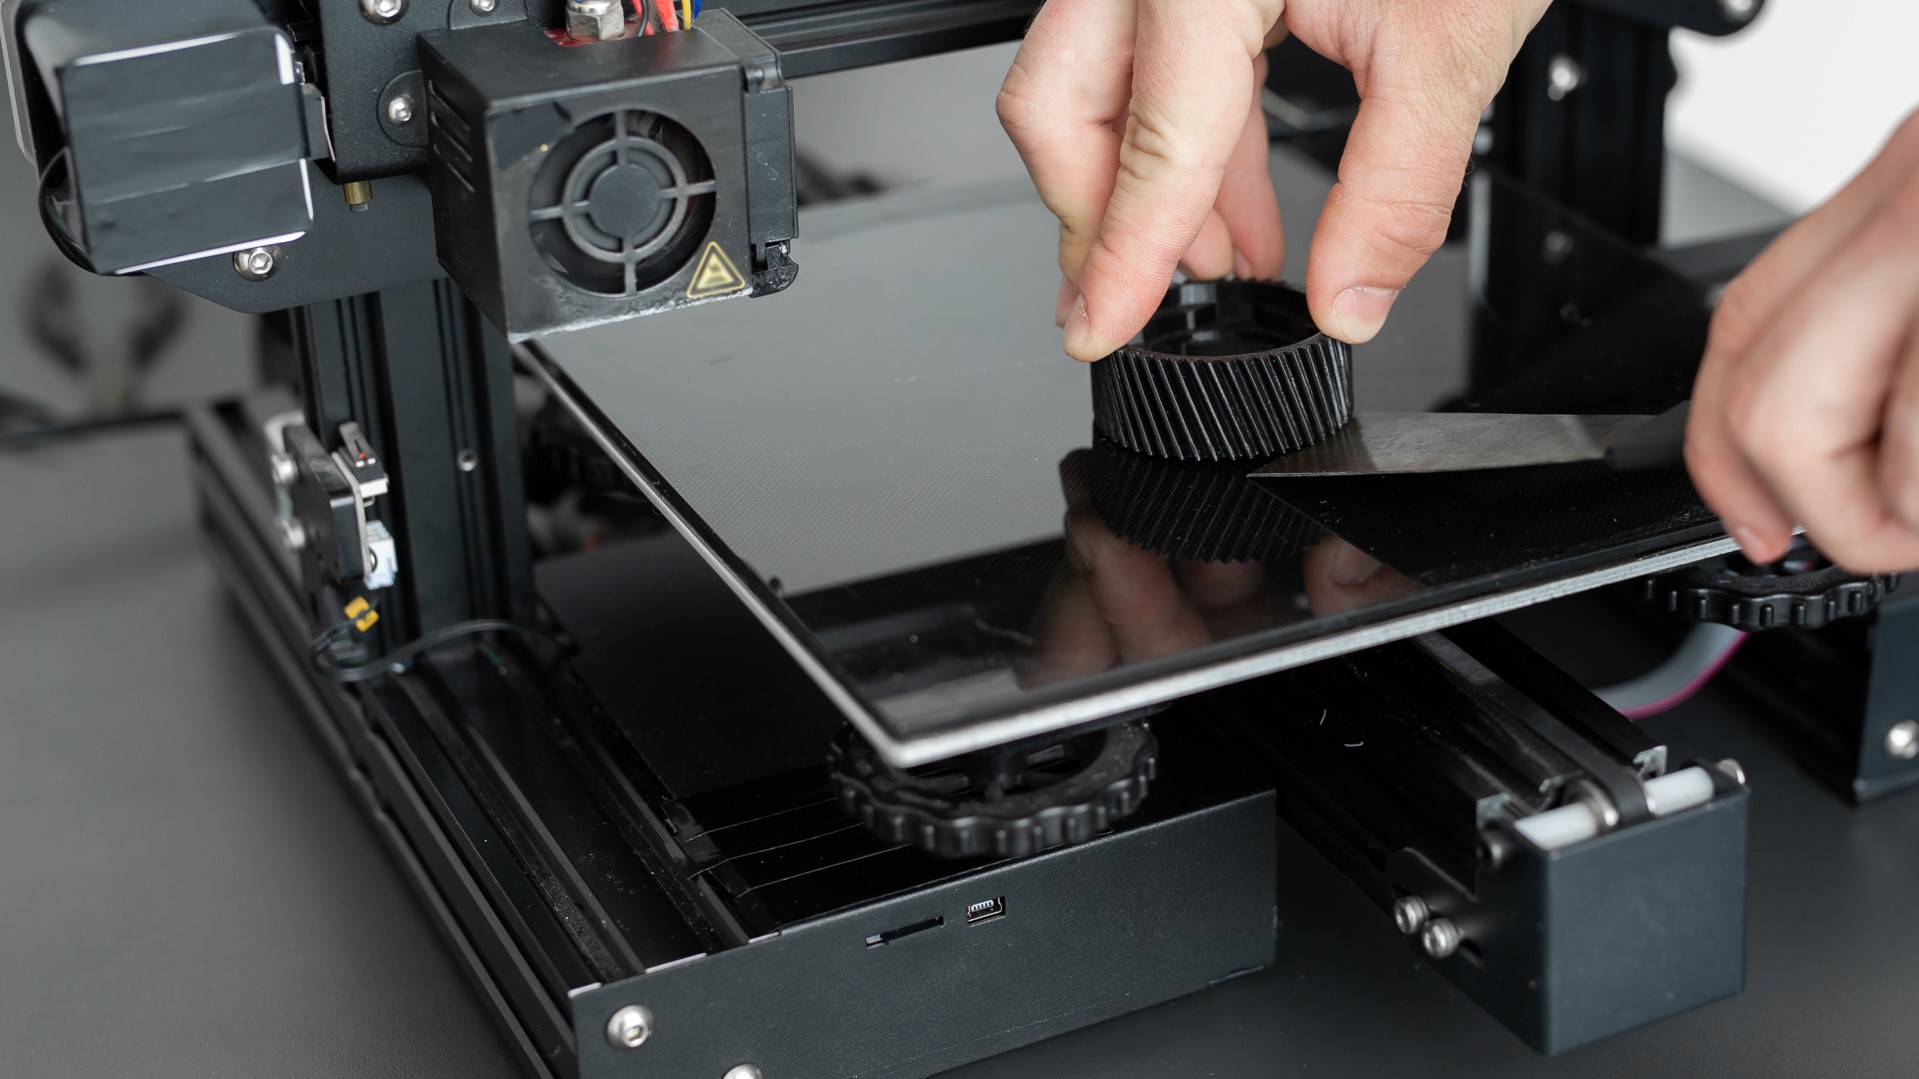 3D printing process